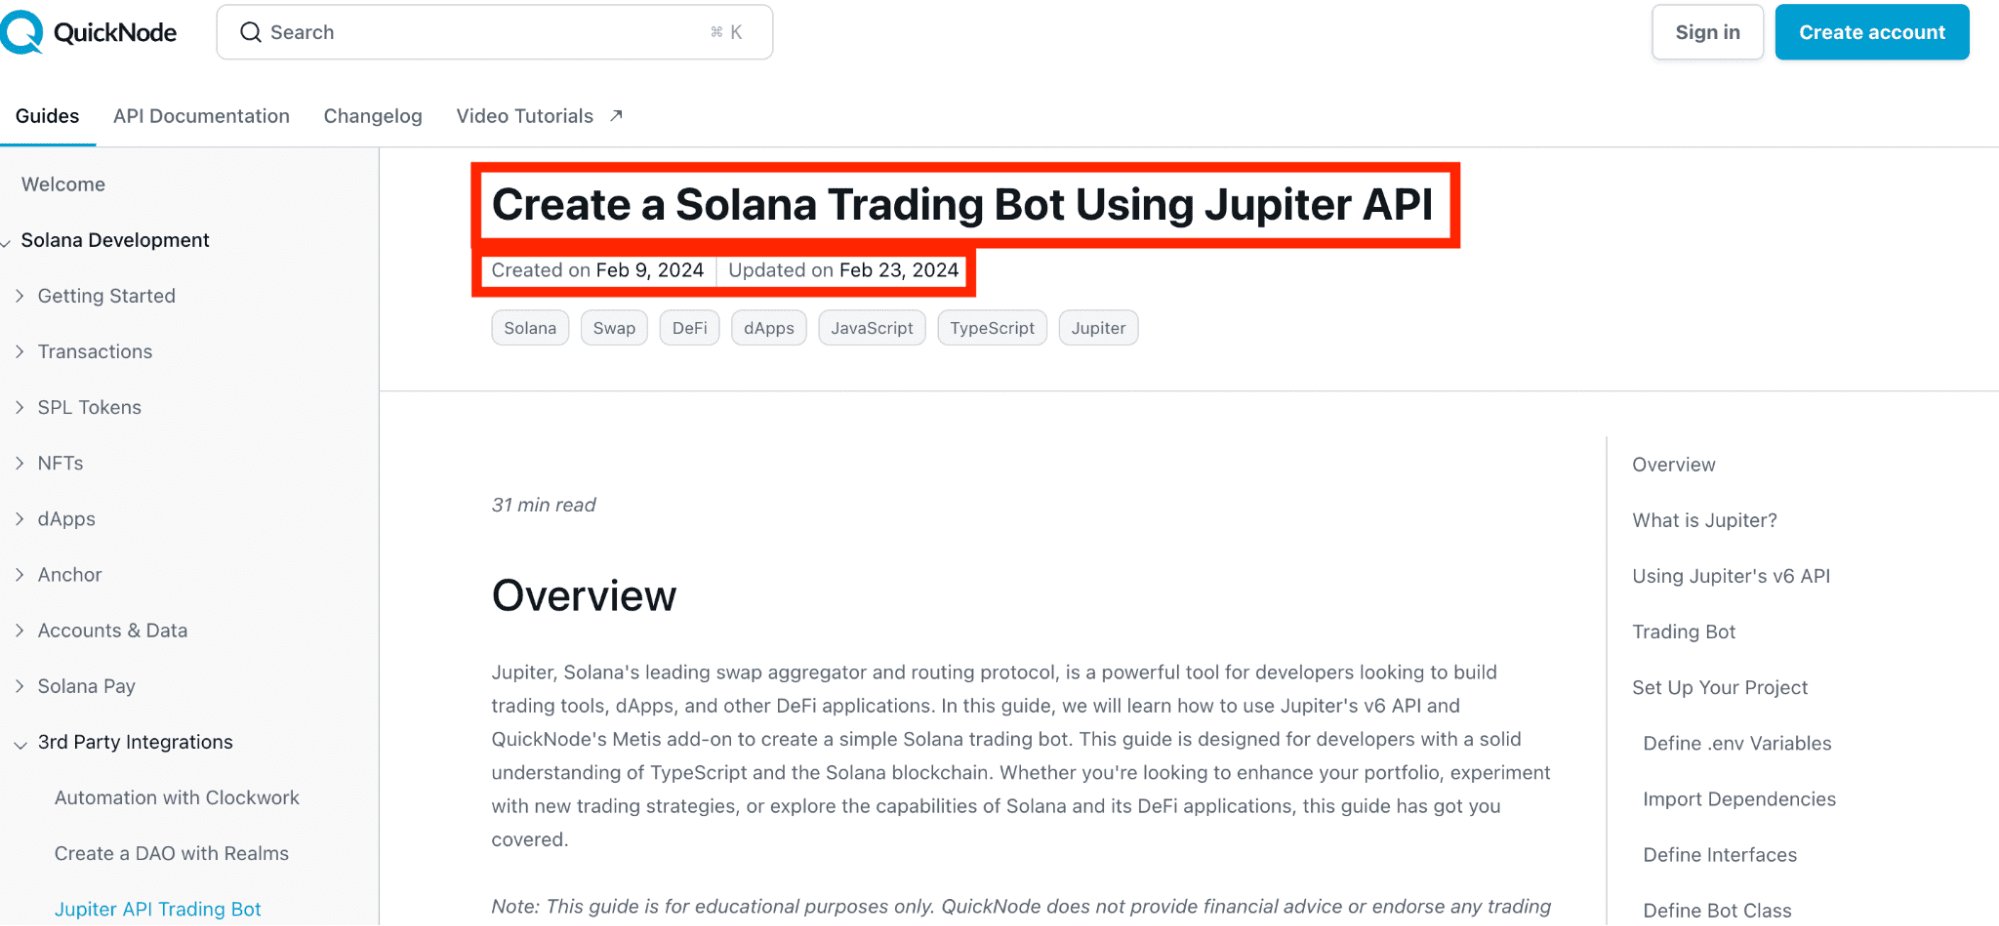 quicknode create a solana trading bot using jupiter api doc - image30.png